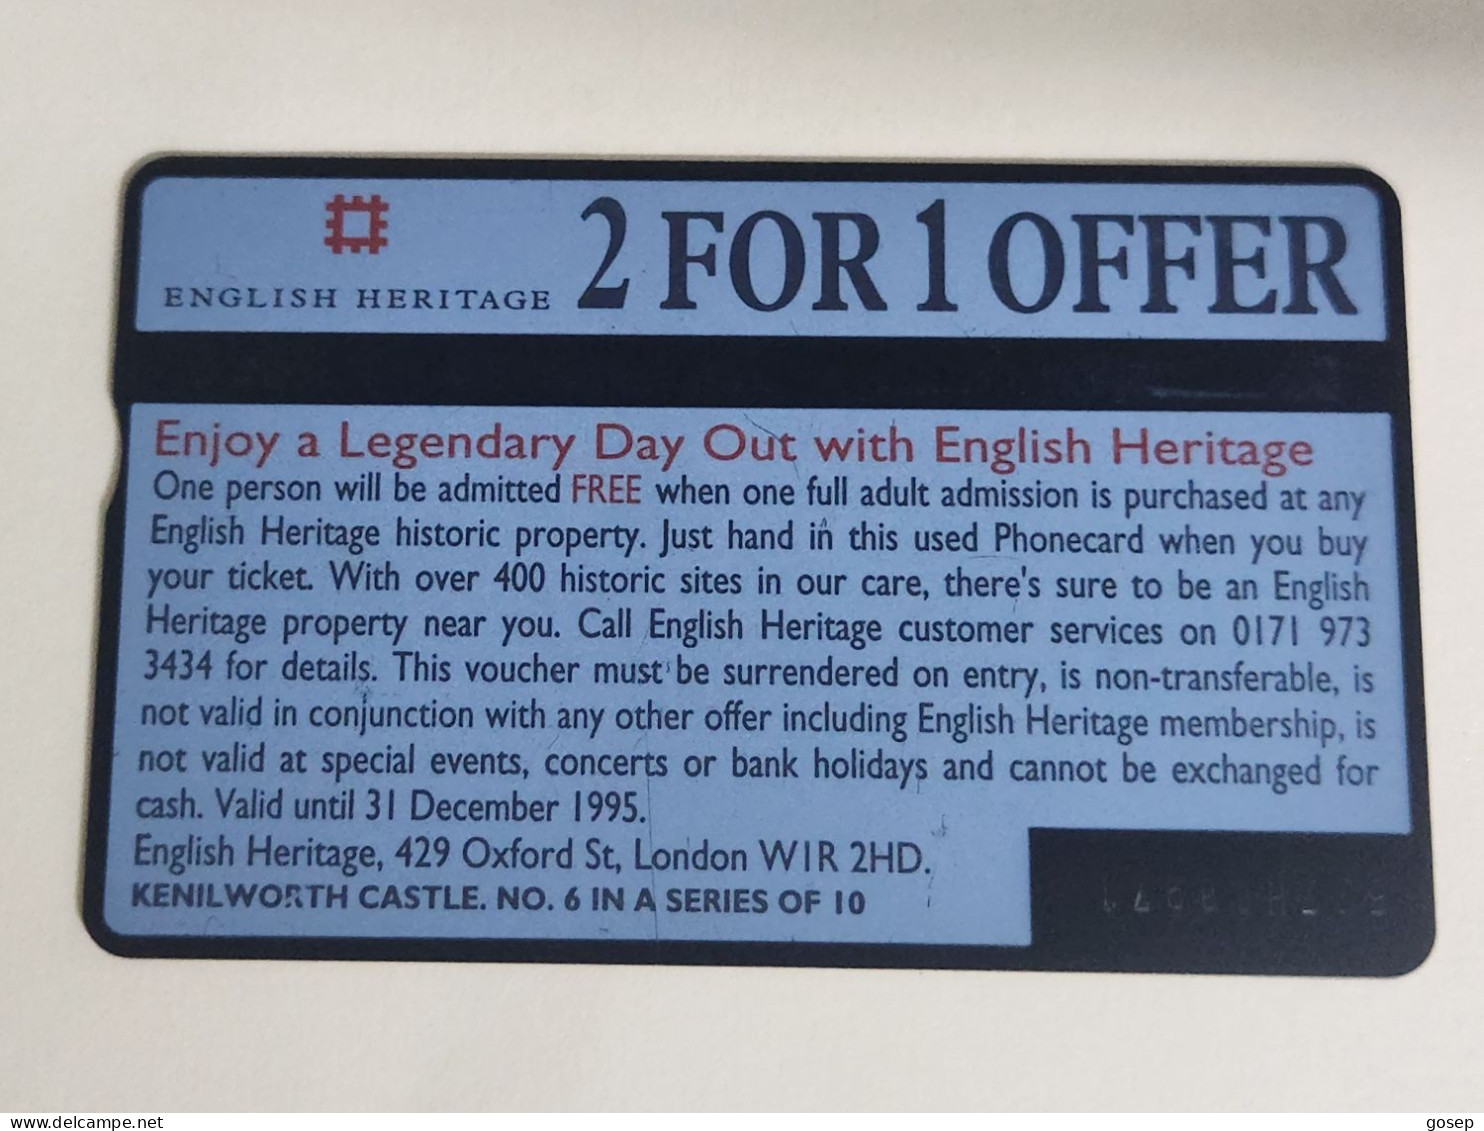 United Kingdom-(BTA118)-HERITAGE-Kenilworth Castle-(207)(100units)(527H18971)price Cataloge3.00£-used+1card Prepiad Free - BT Advertising Issues